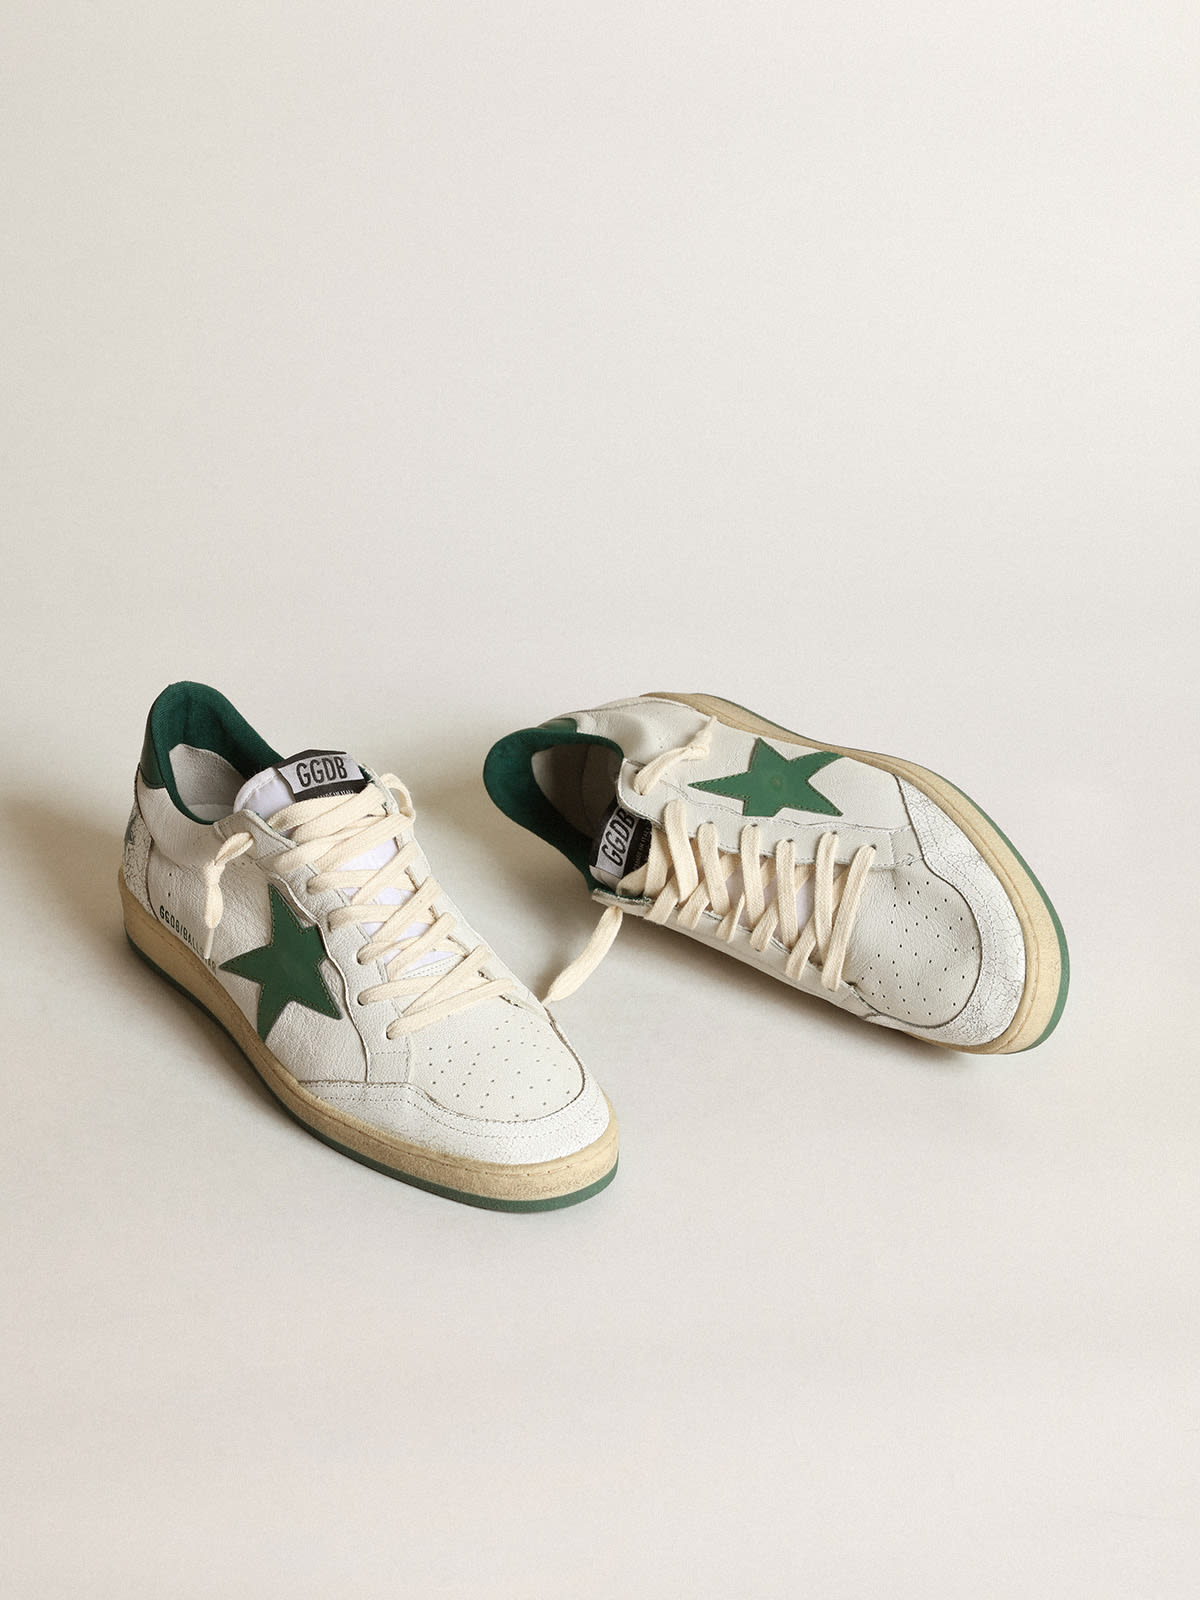 Golden Goose - Sneakers Ball Star en cuir nappa blanc avec étoile et contrefort en cuir mat vert in 